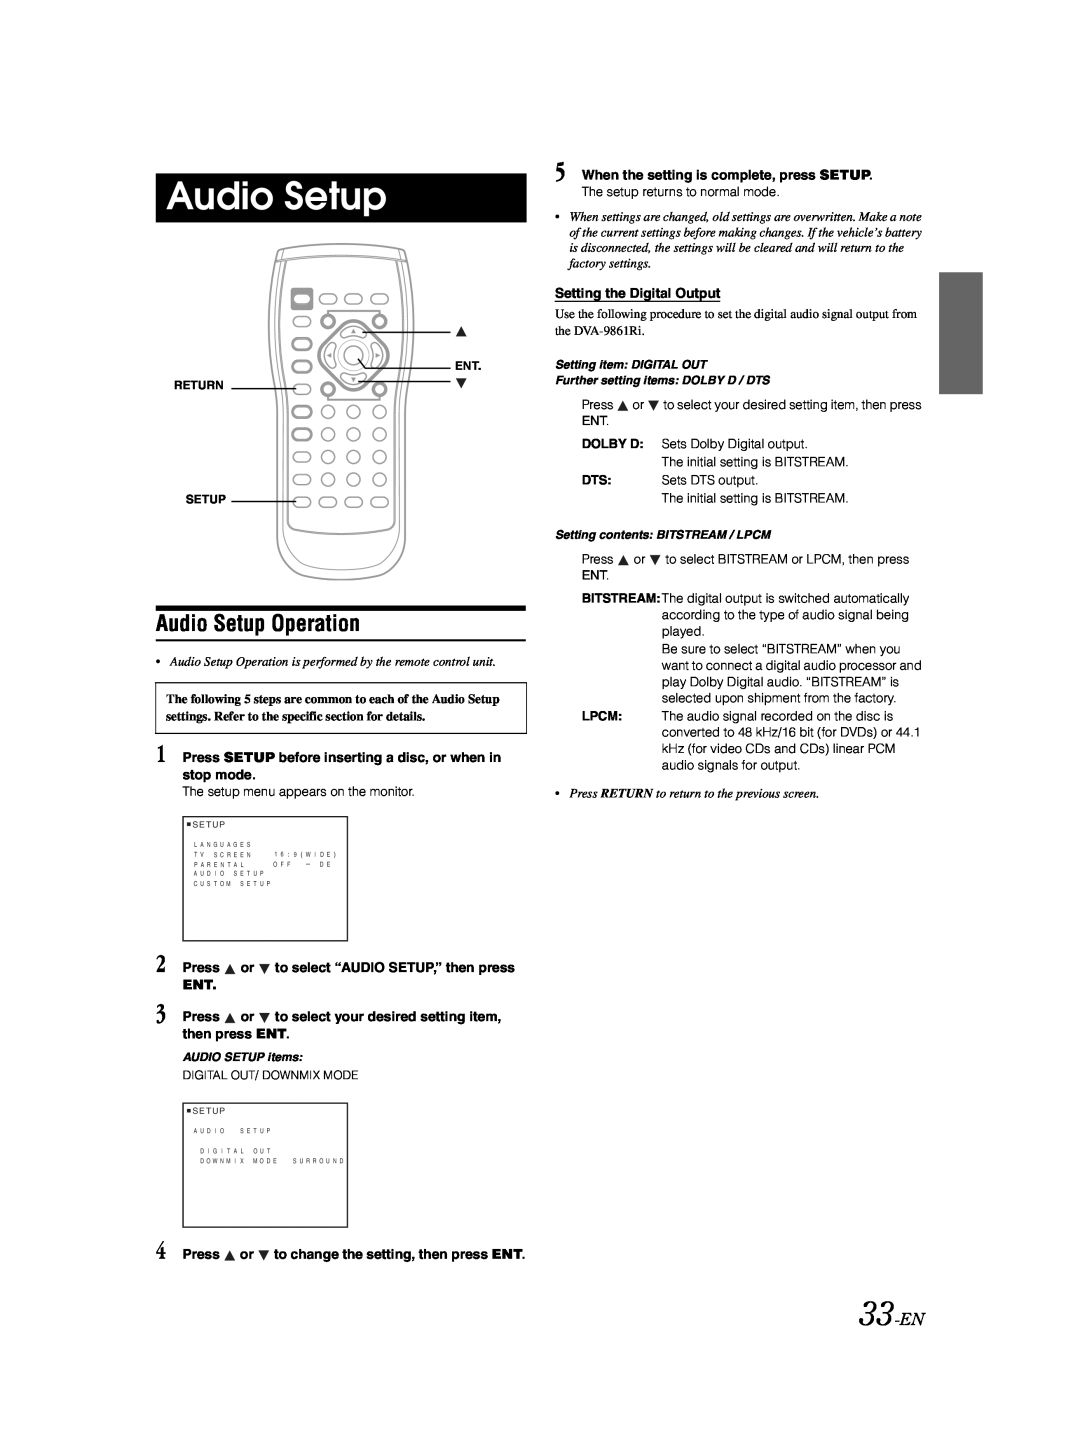 Alpine DVA-9861Ri owner manual Audio Setup Operation, 33-EN 